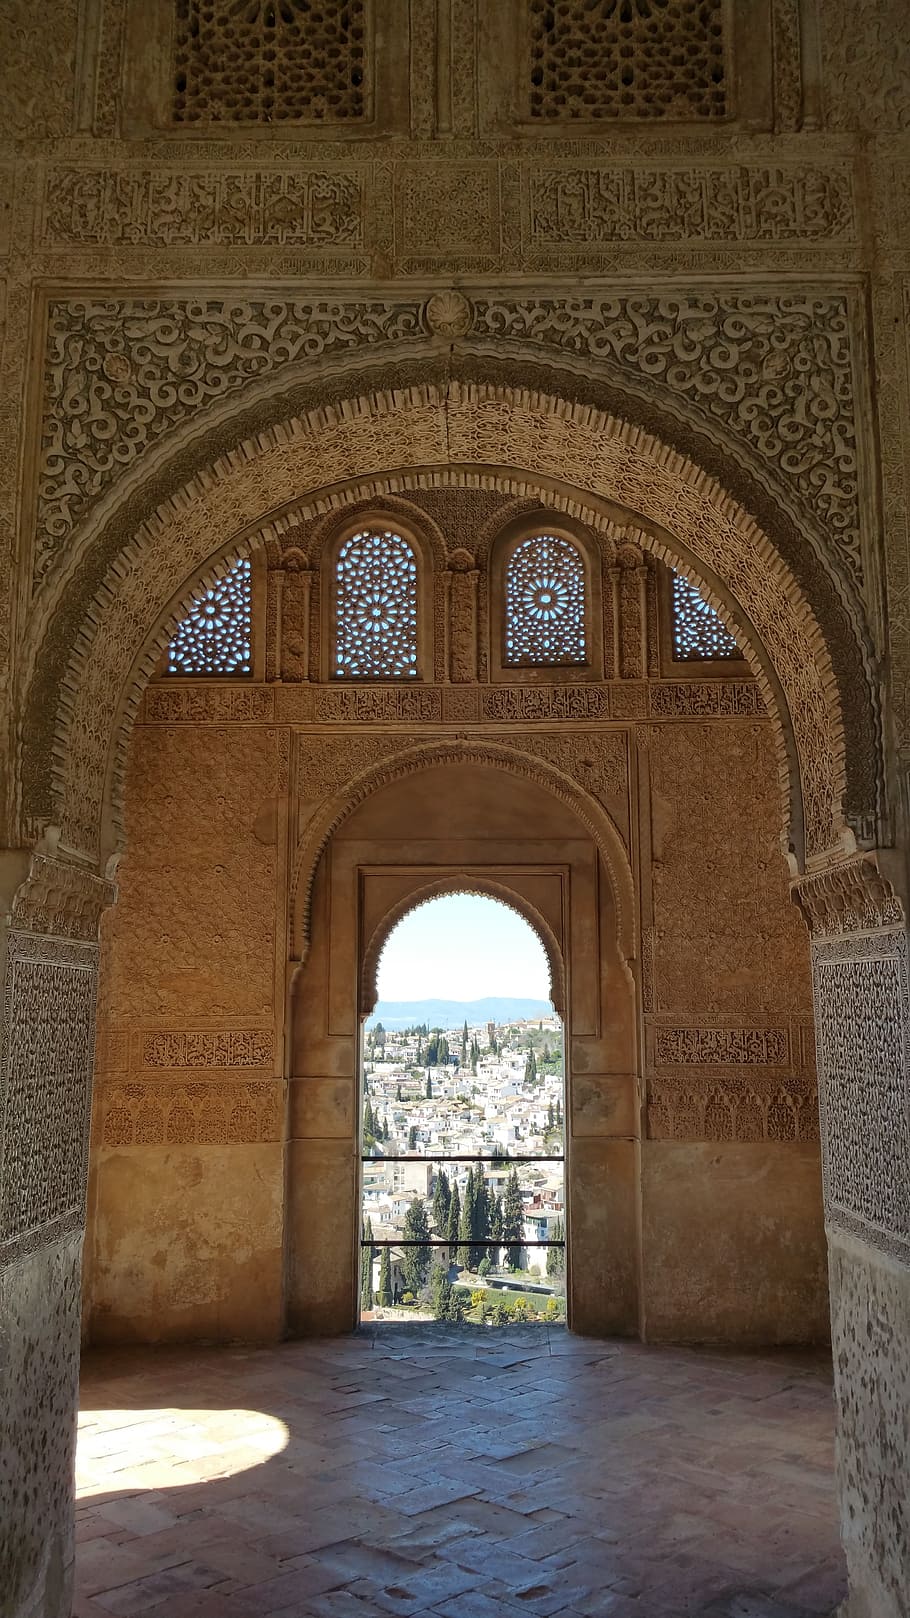 Alhambra, Alhamra, Granada, calat alhamra, fortress, royal